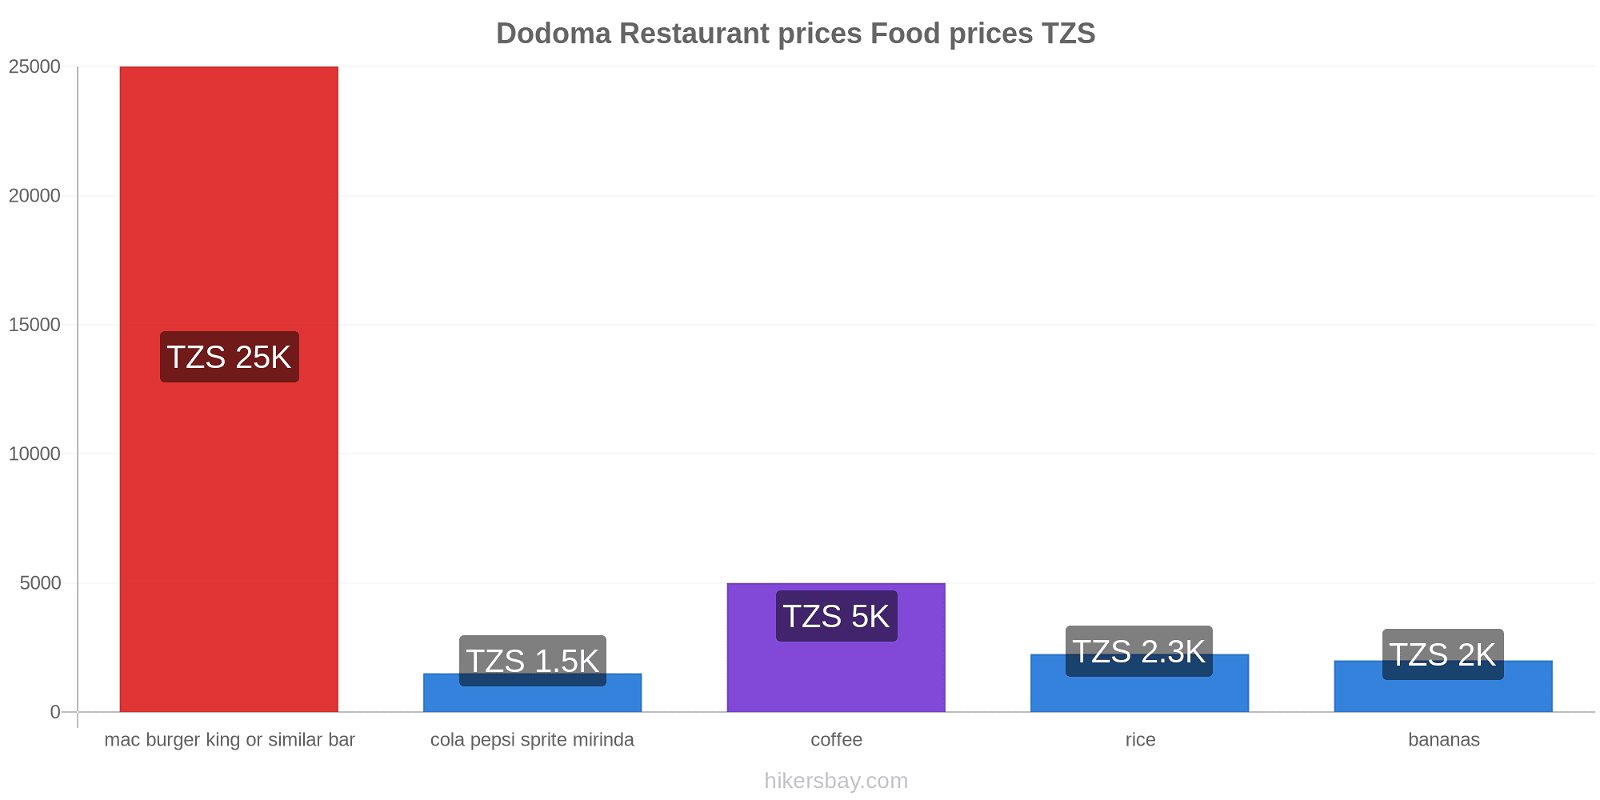 Dodoma price changes hikersbay.com